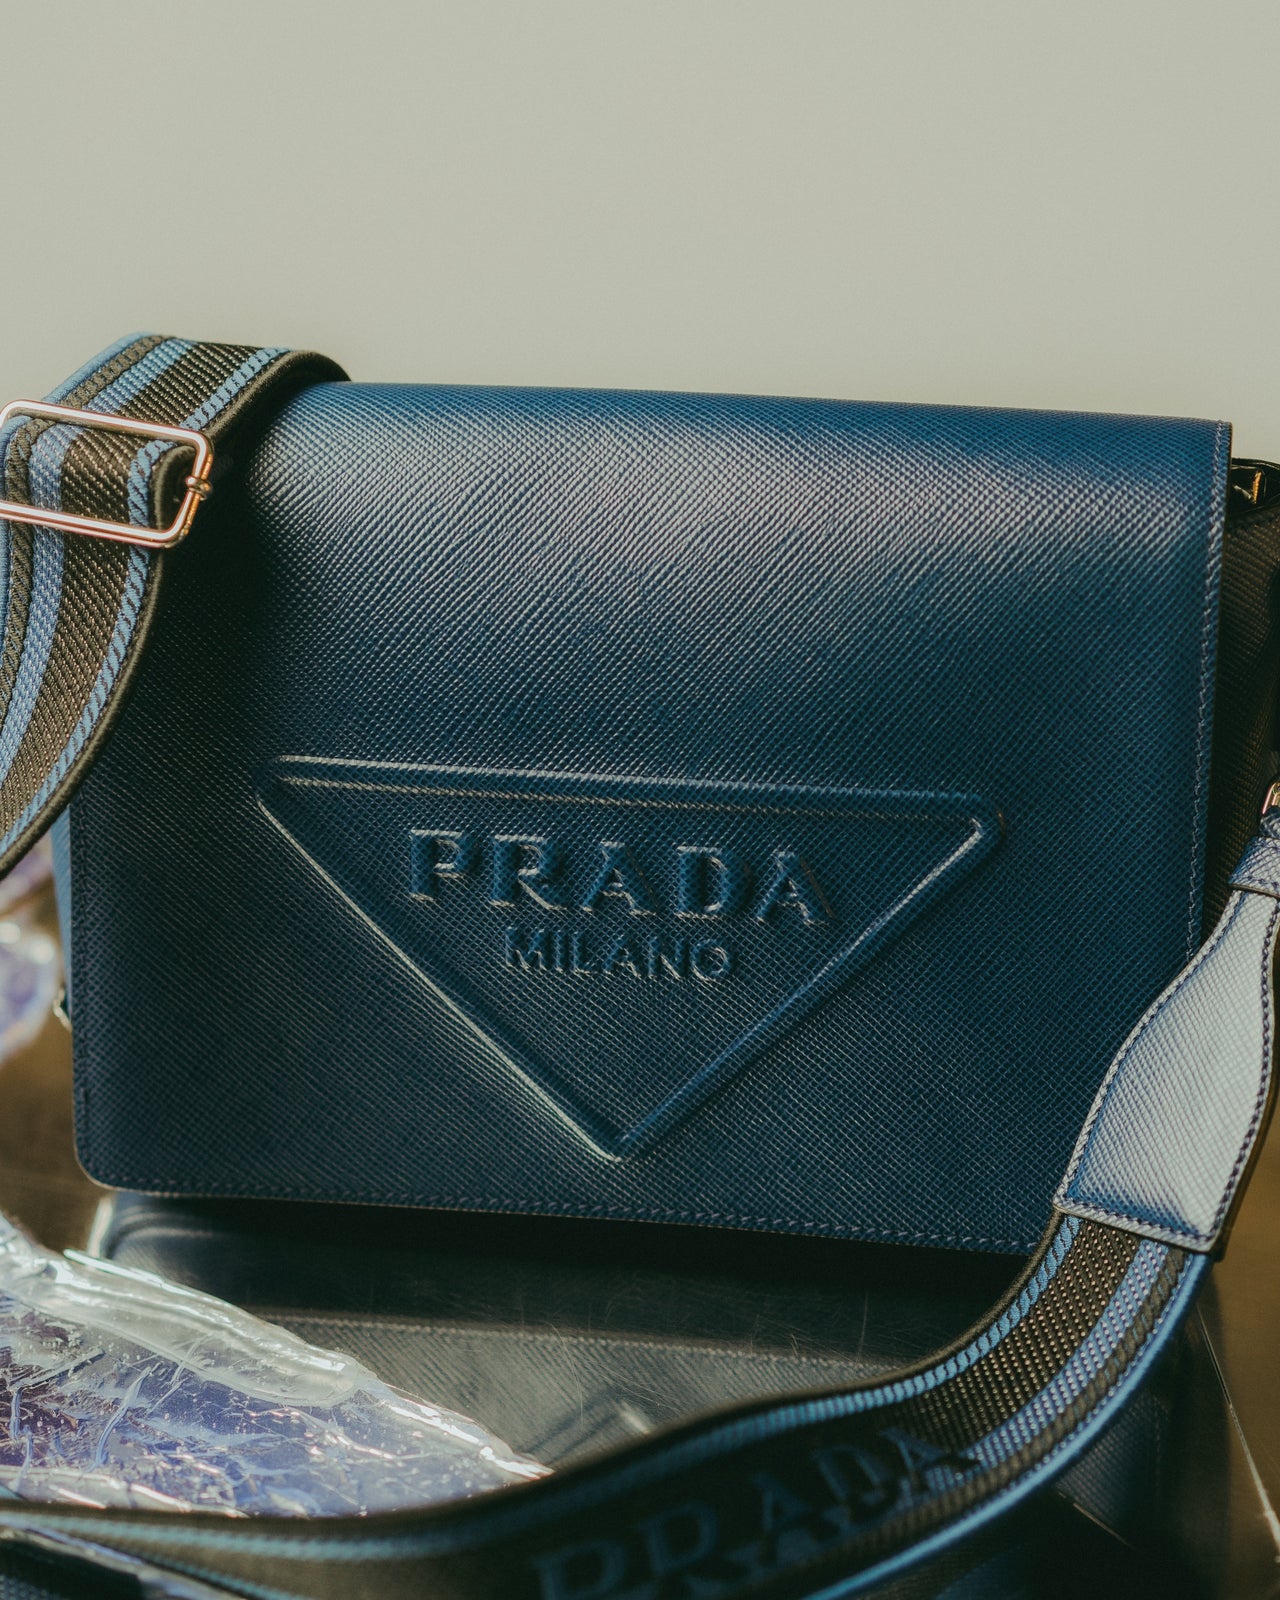 Prada Logo-embossed Saffiano leather bag